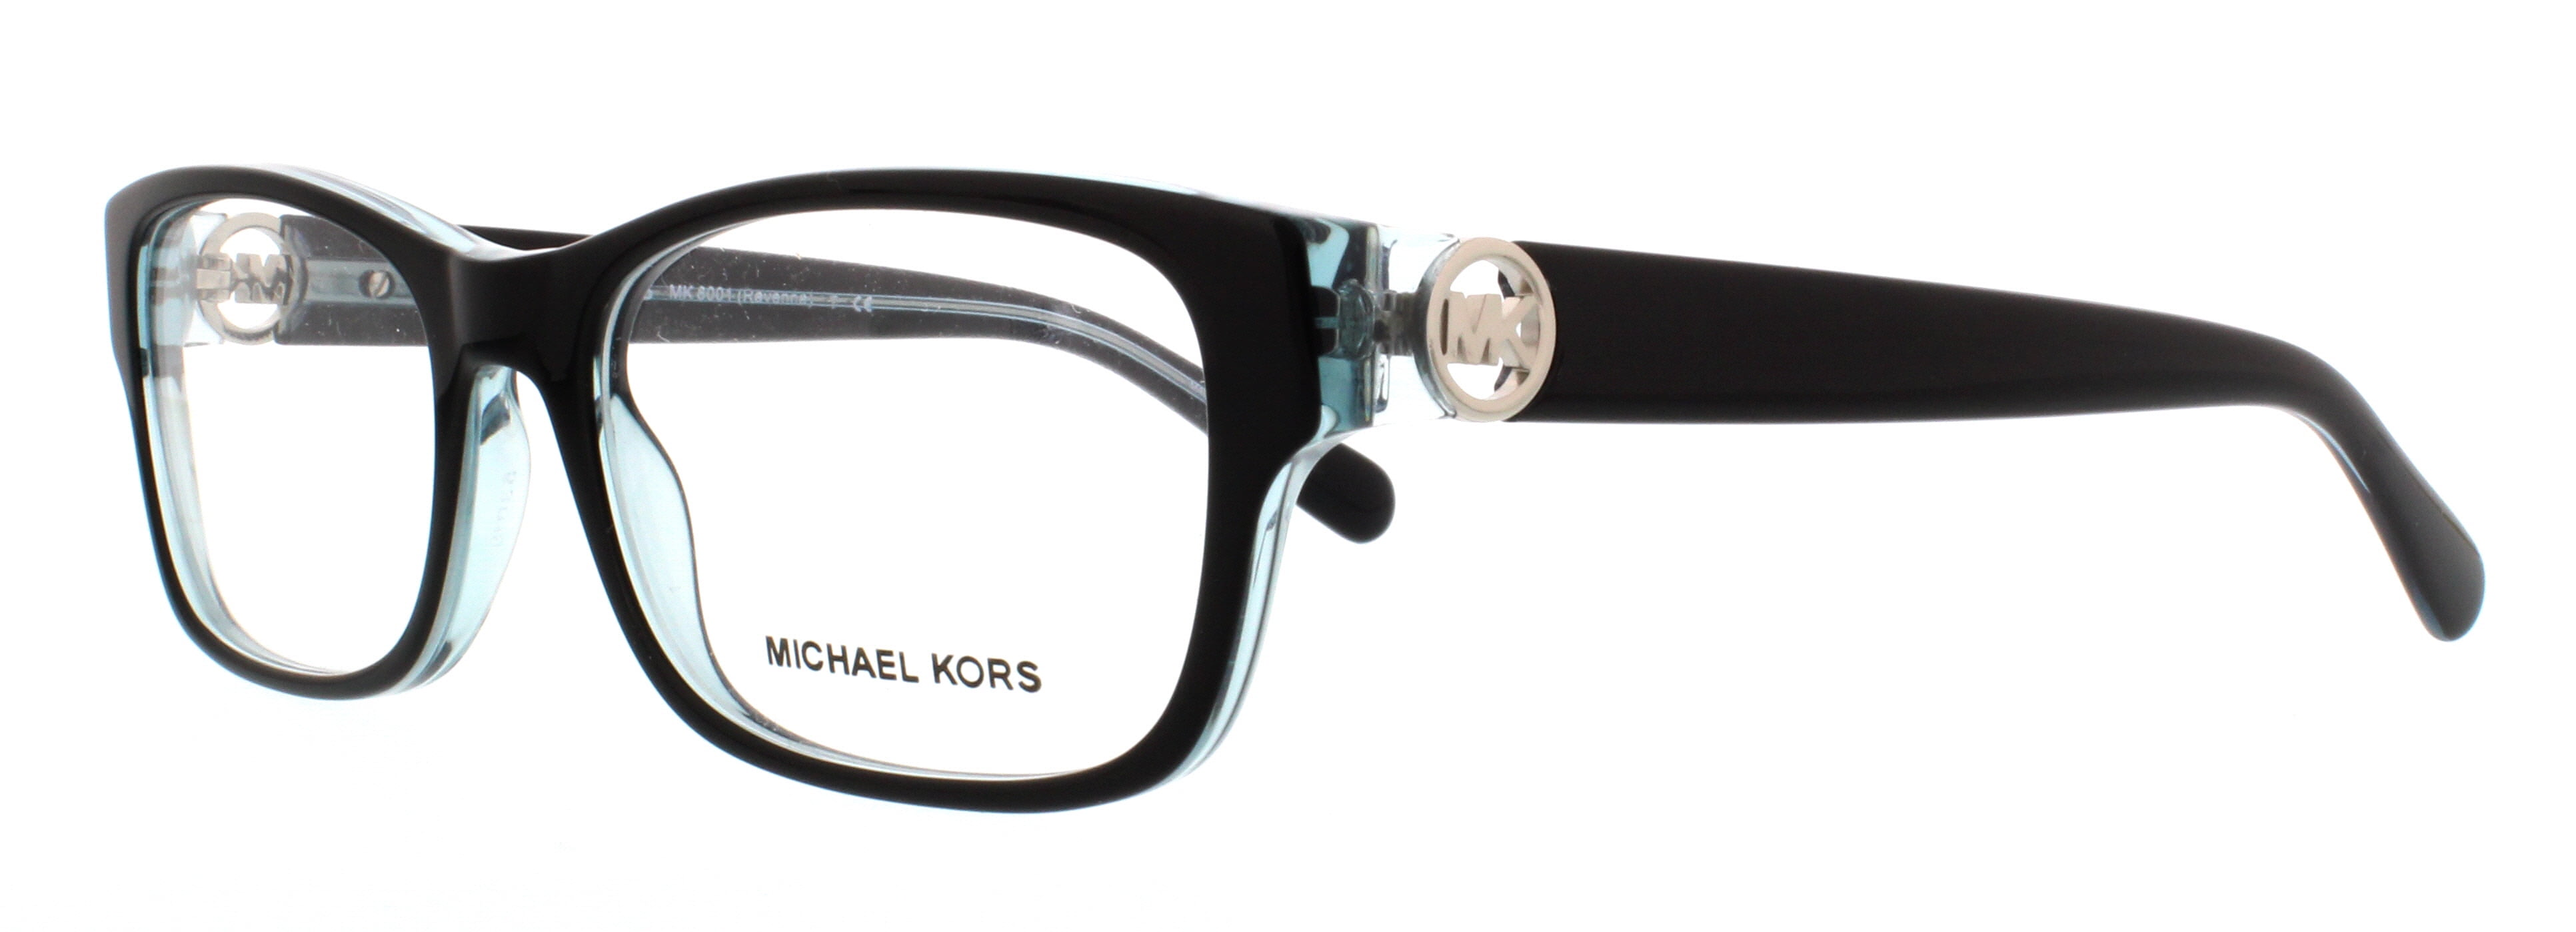 michael kors blue eyeglasses